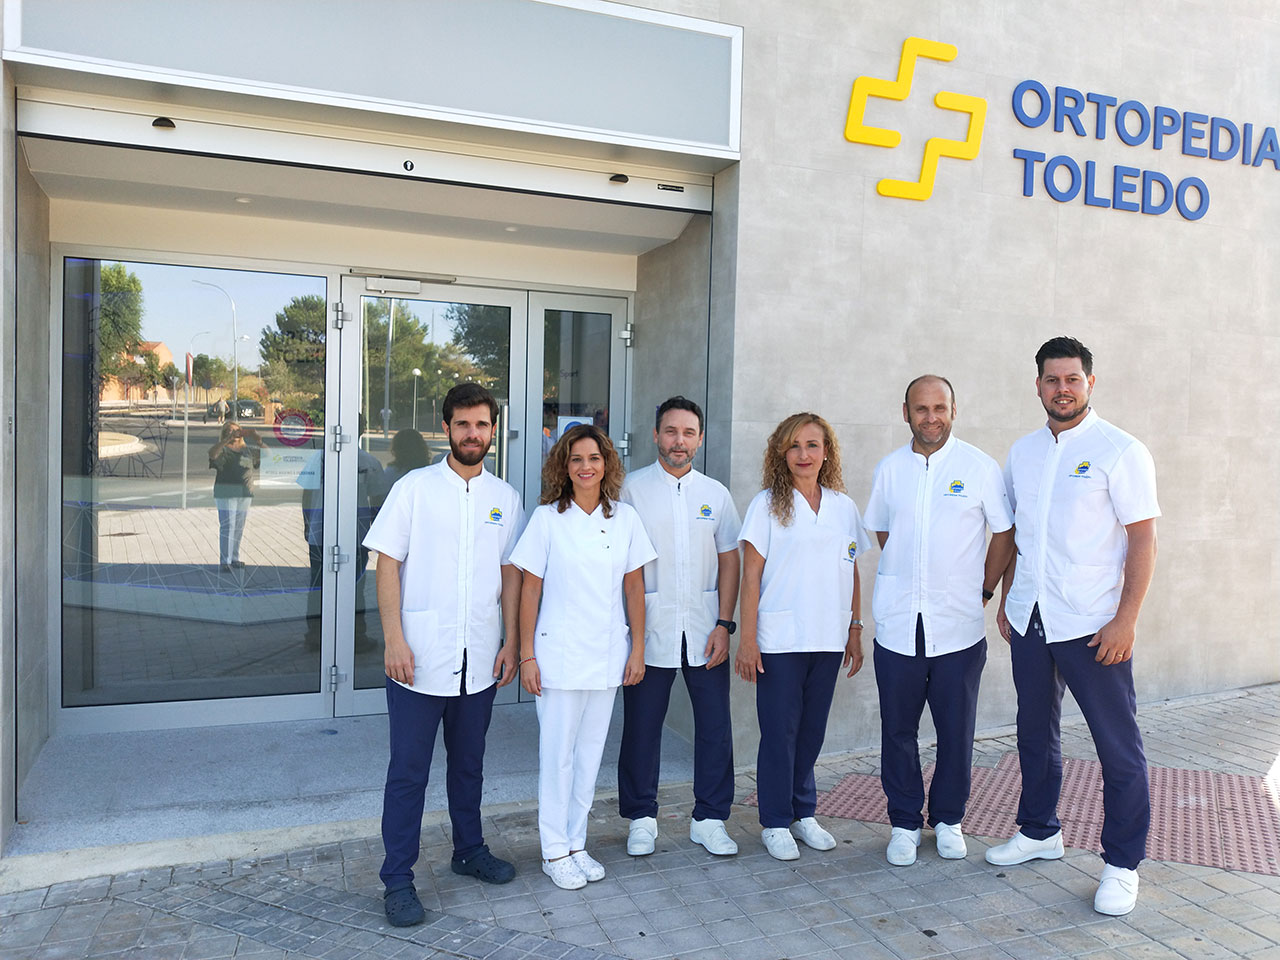 Ortopedia Toledo